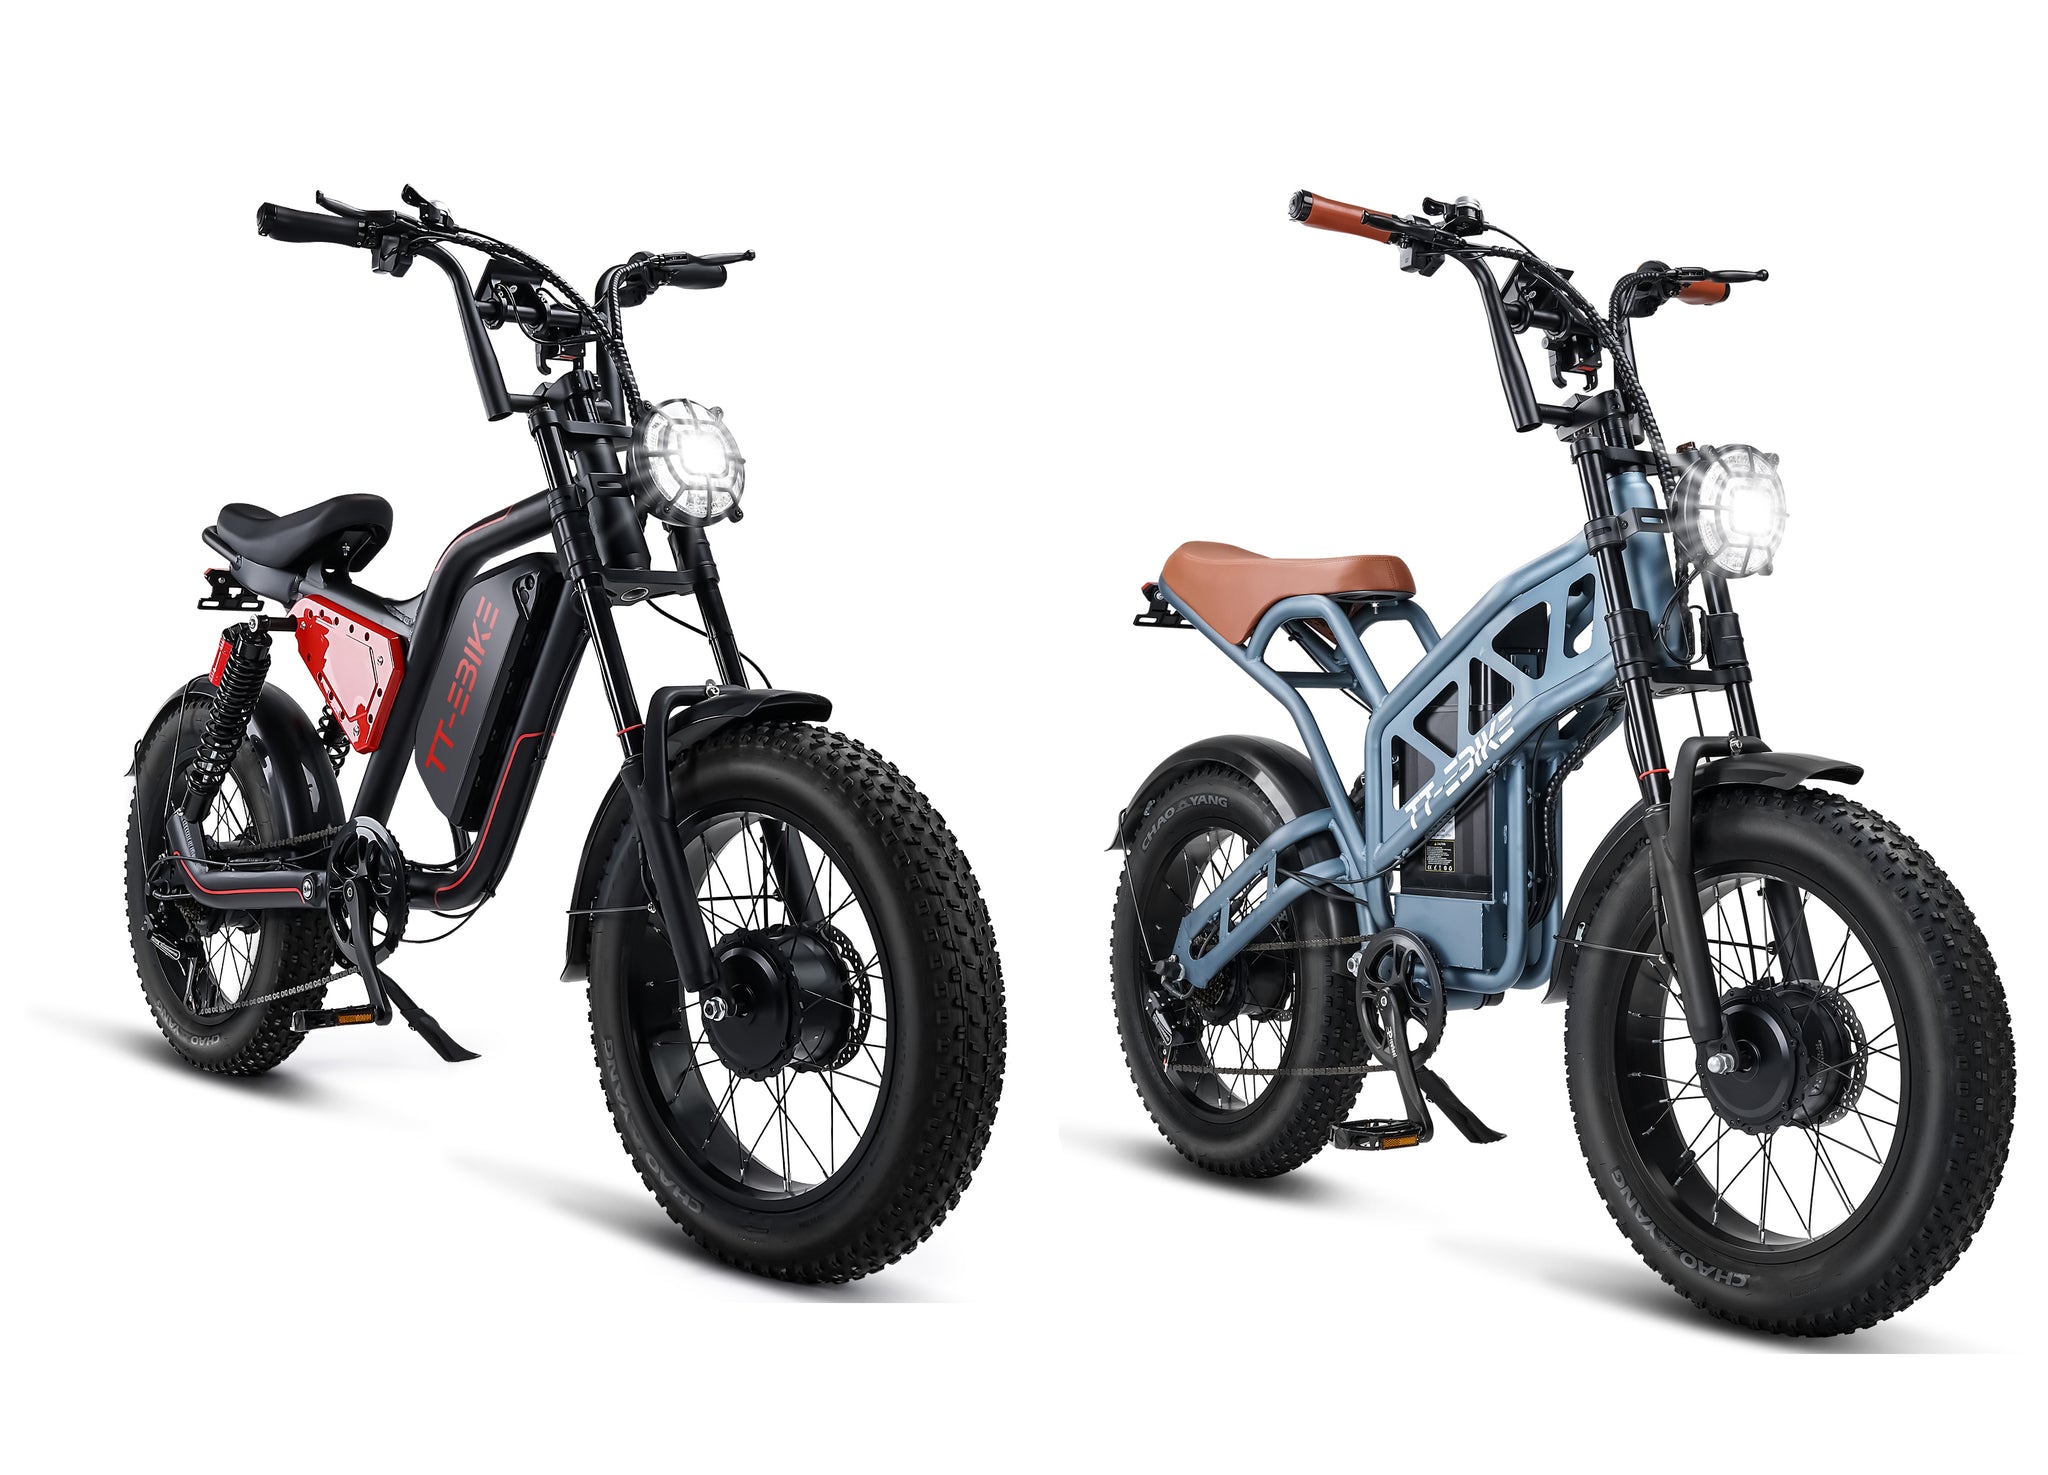 New Product Launch: TT-EBIKE 2000W Dual Motor Electric Bike - Enjoy an Exclusive $200 Cashback When You Buy on Amazon!